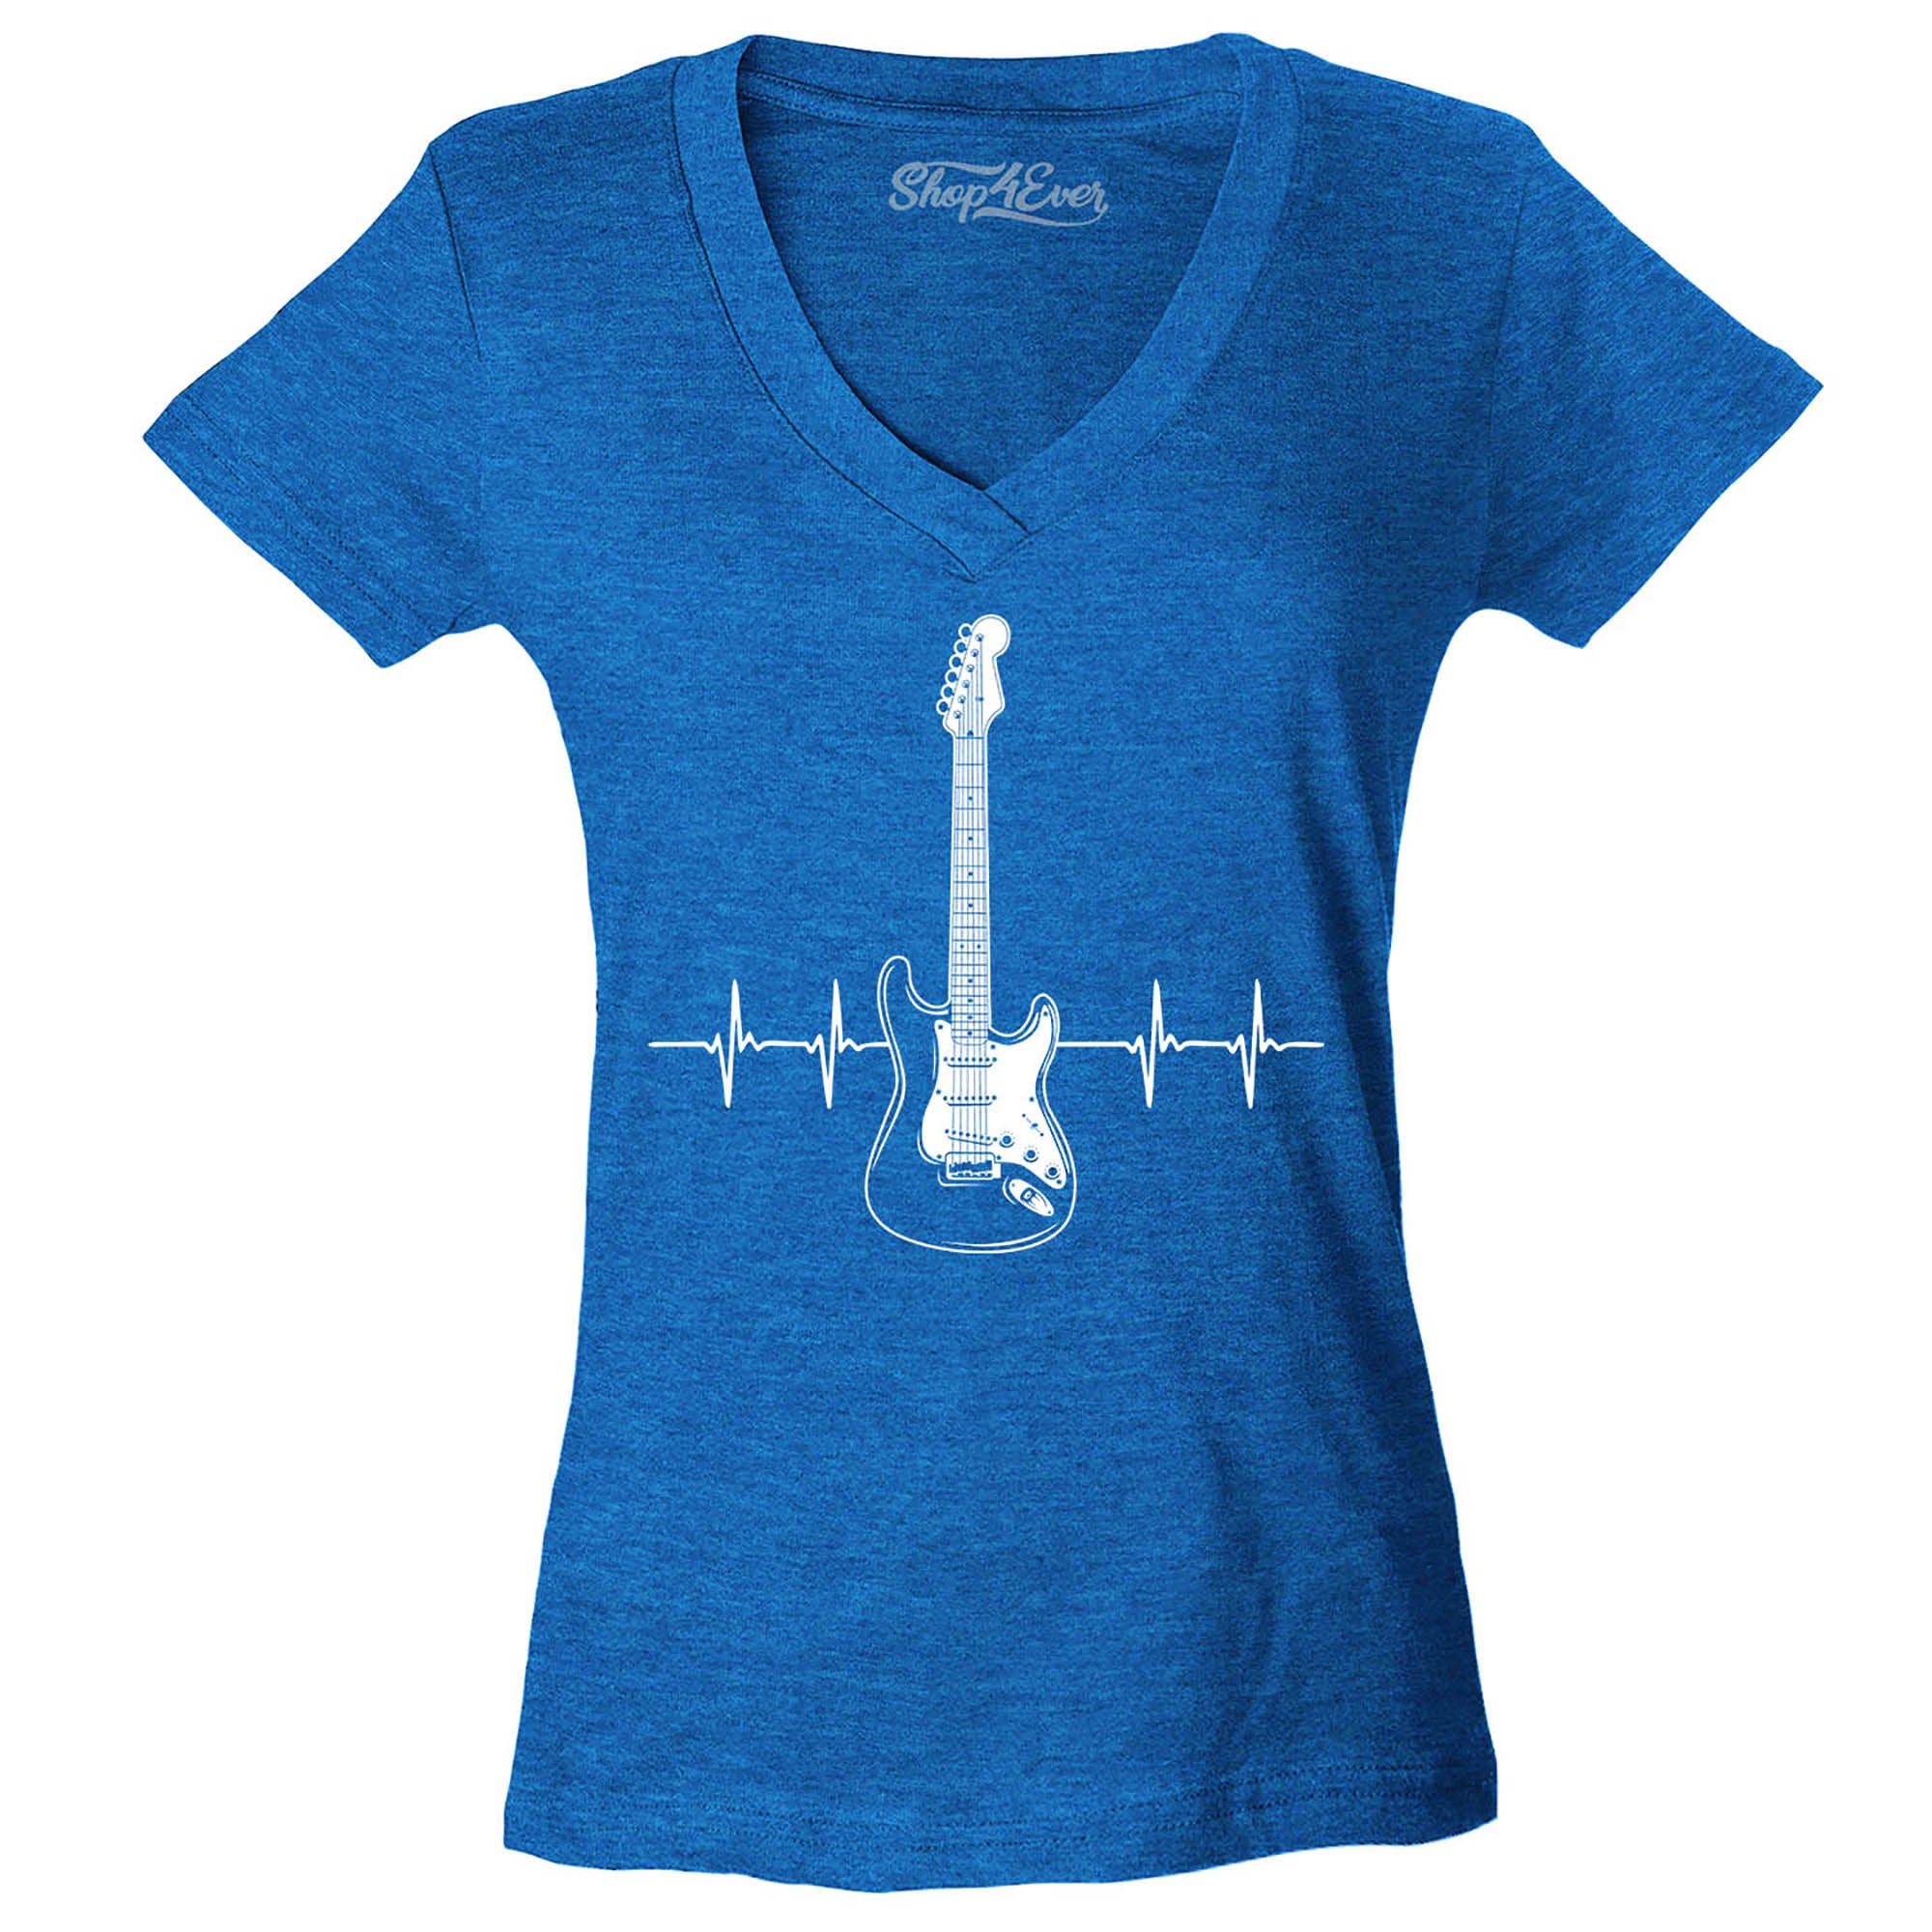 Electric Guitar Heartbeat Musician Women's V-Neck T-Shirt Slim Fit